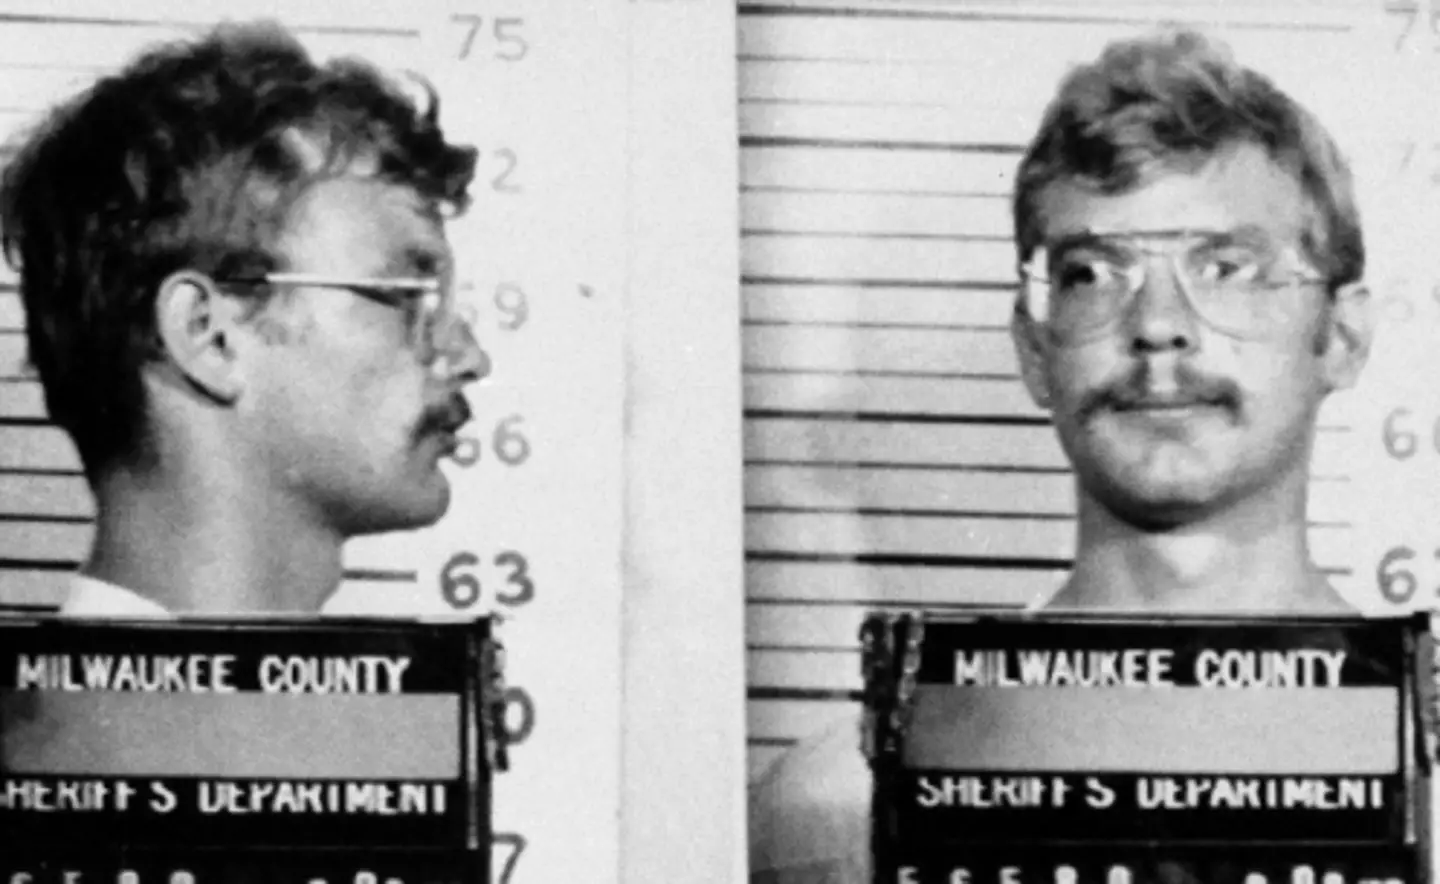 Dahmer was arrested in July 1991.